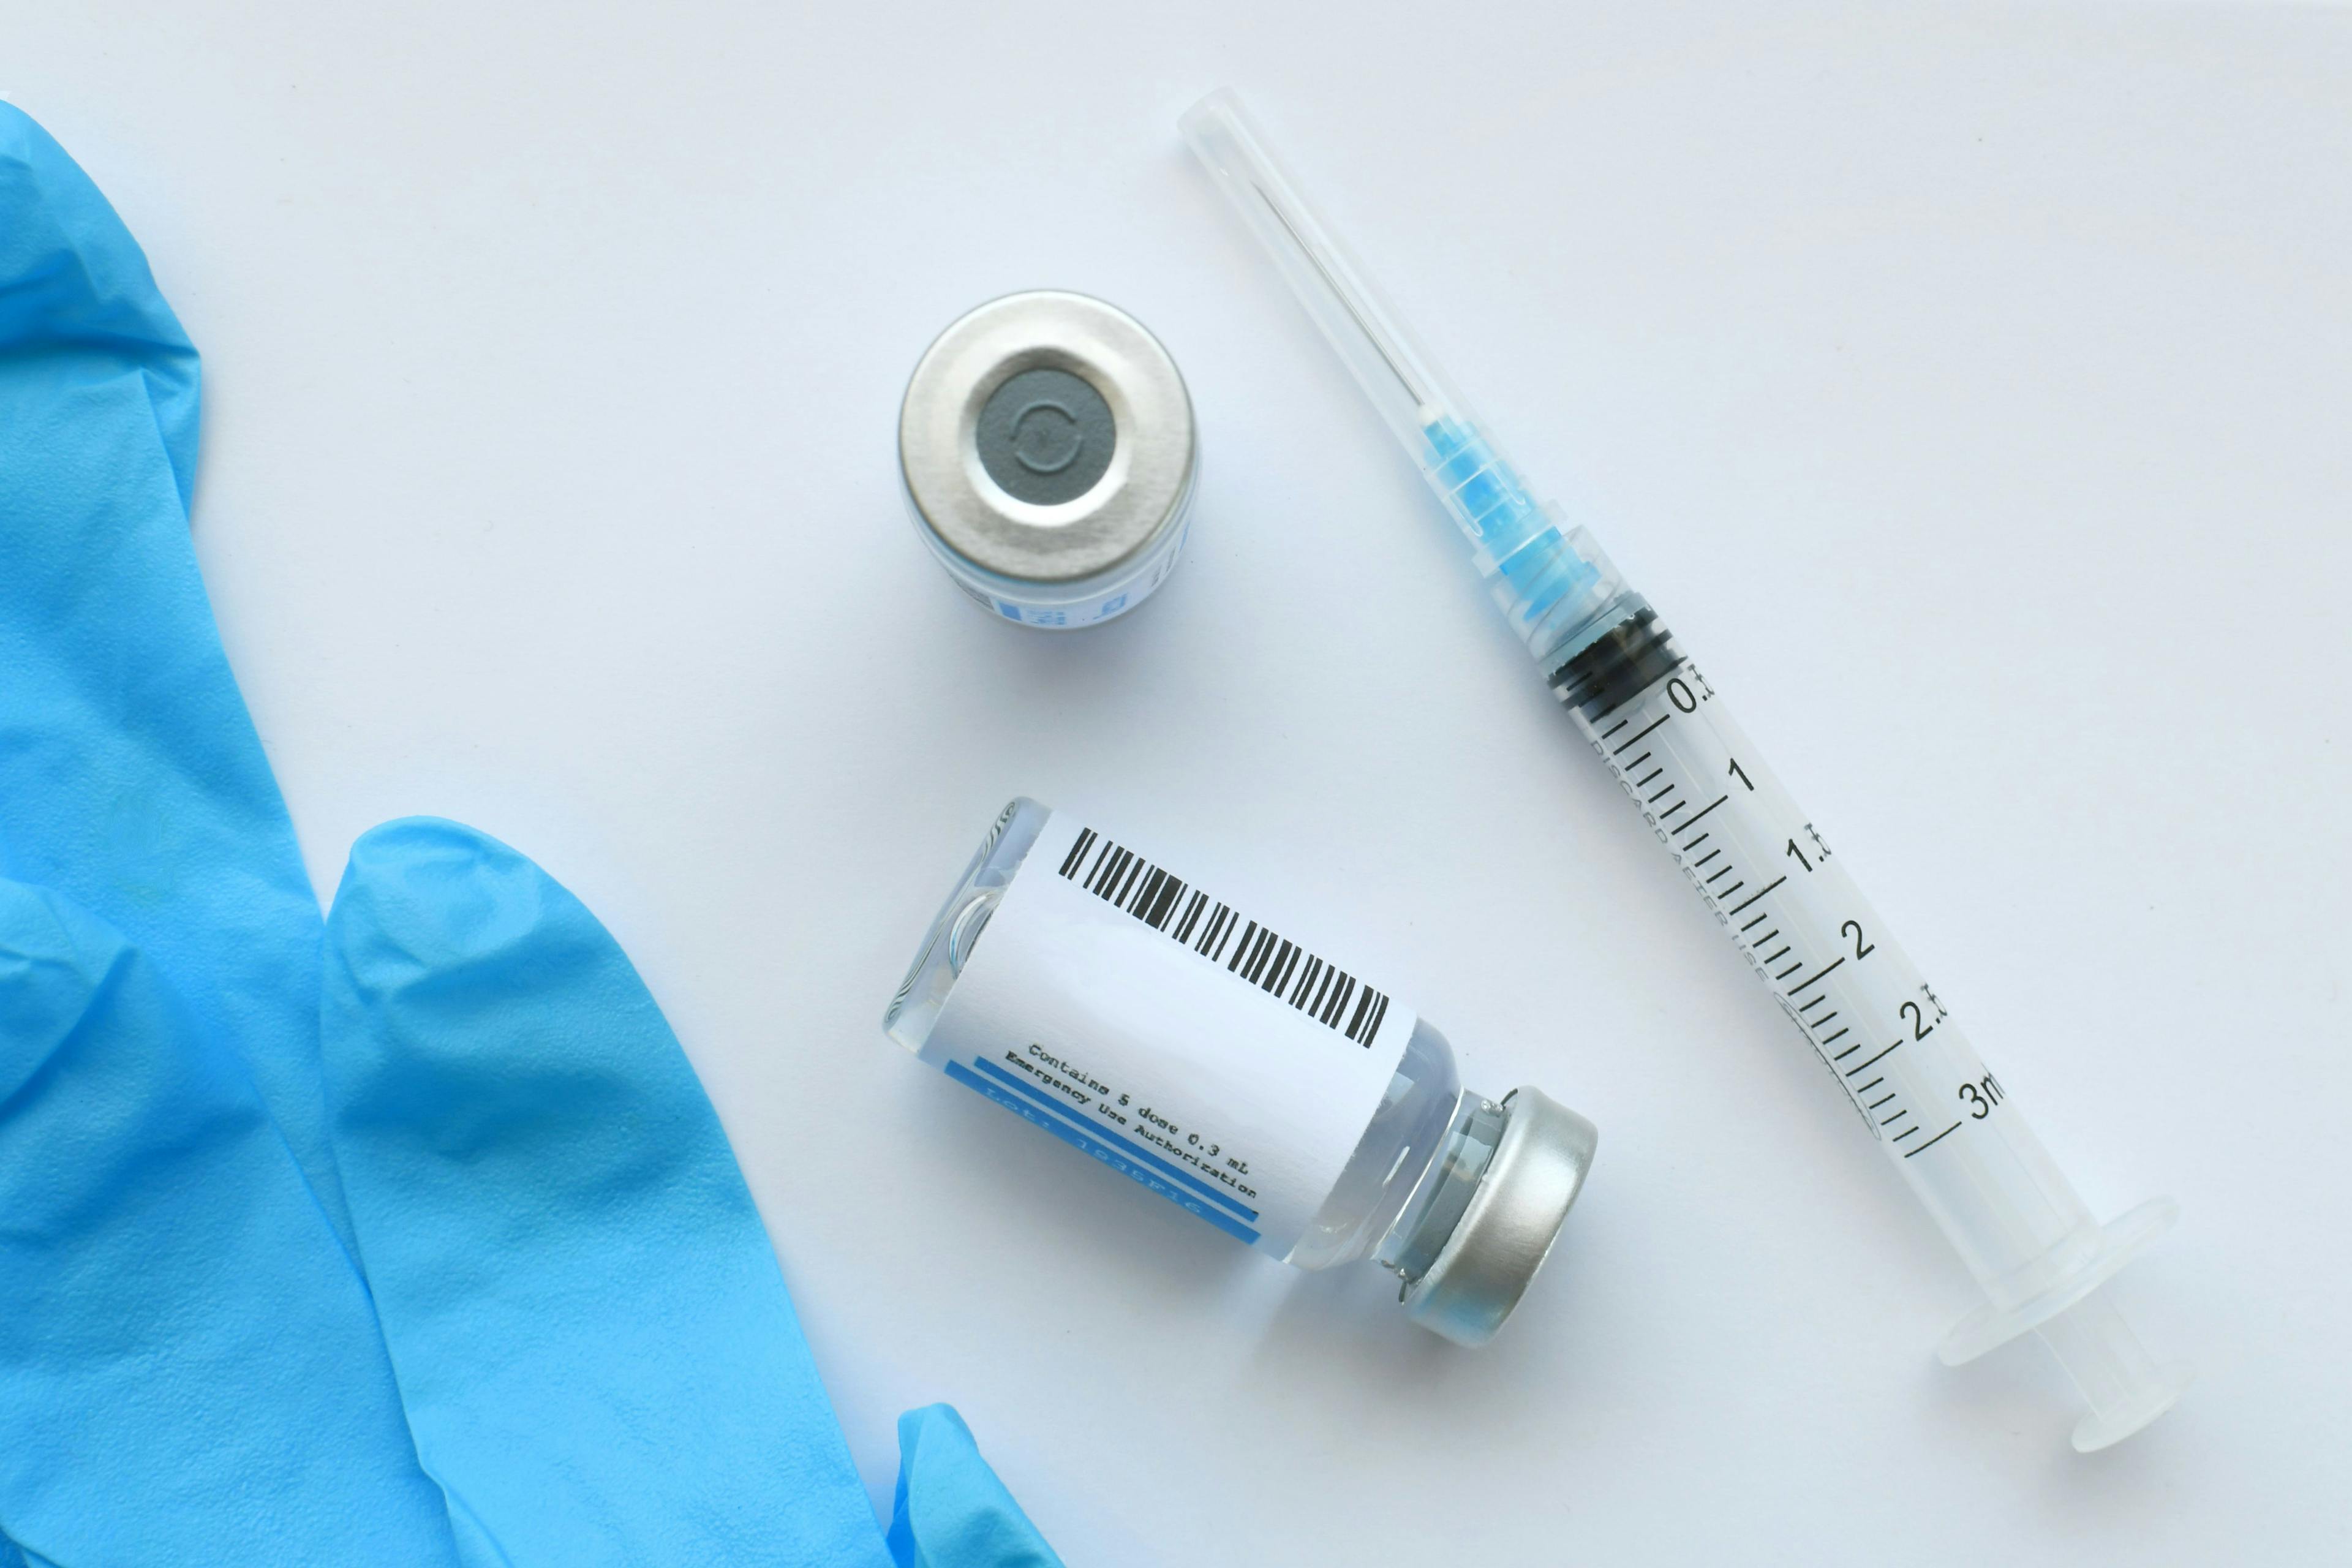 generic vaccine vial and syringe | Image credit: MargJohnsonVA – stock.adobe.com